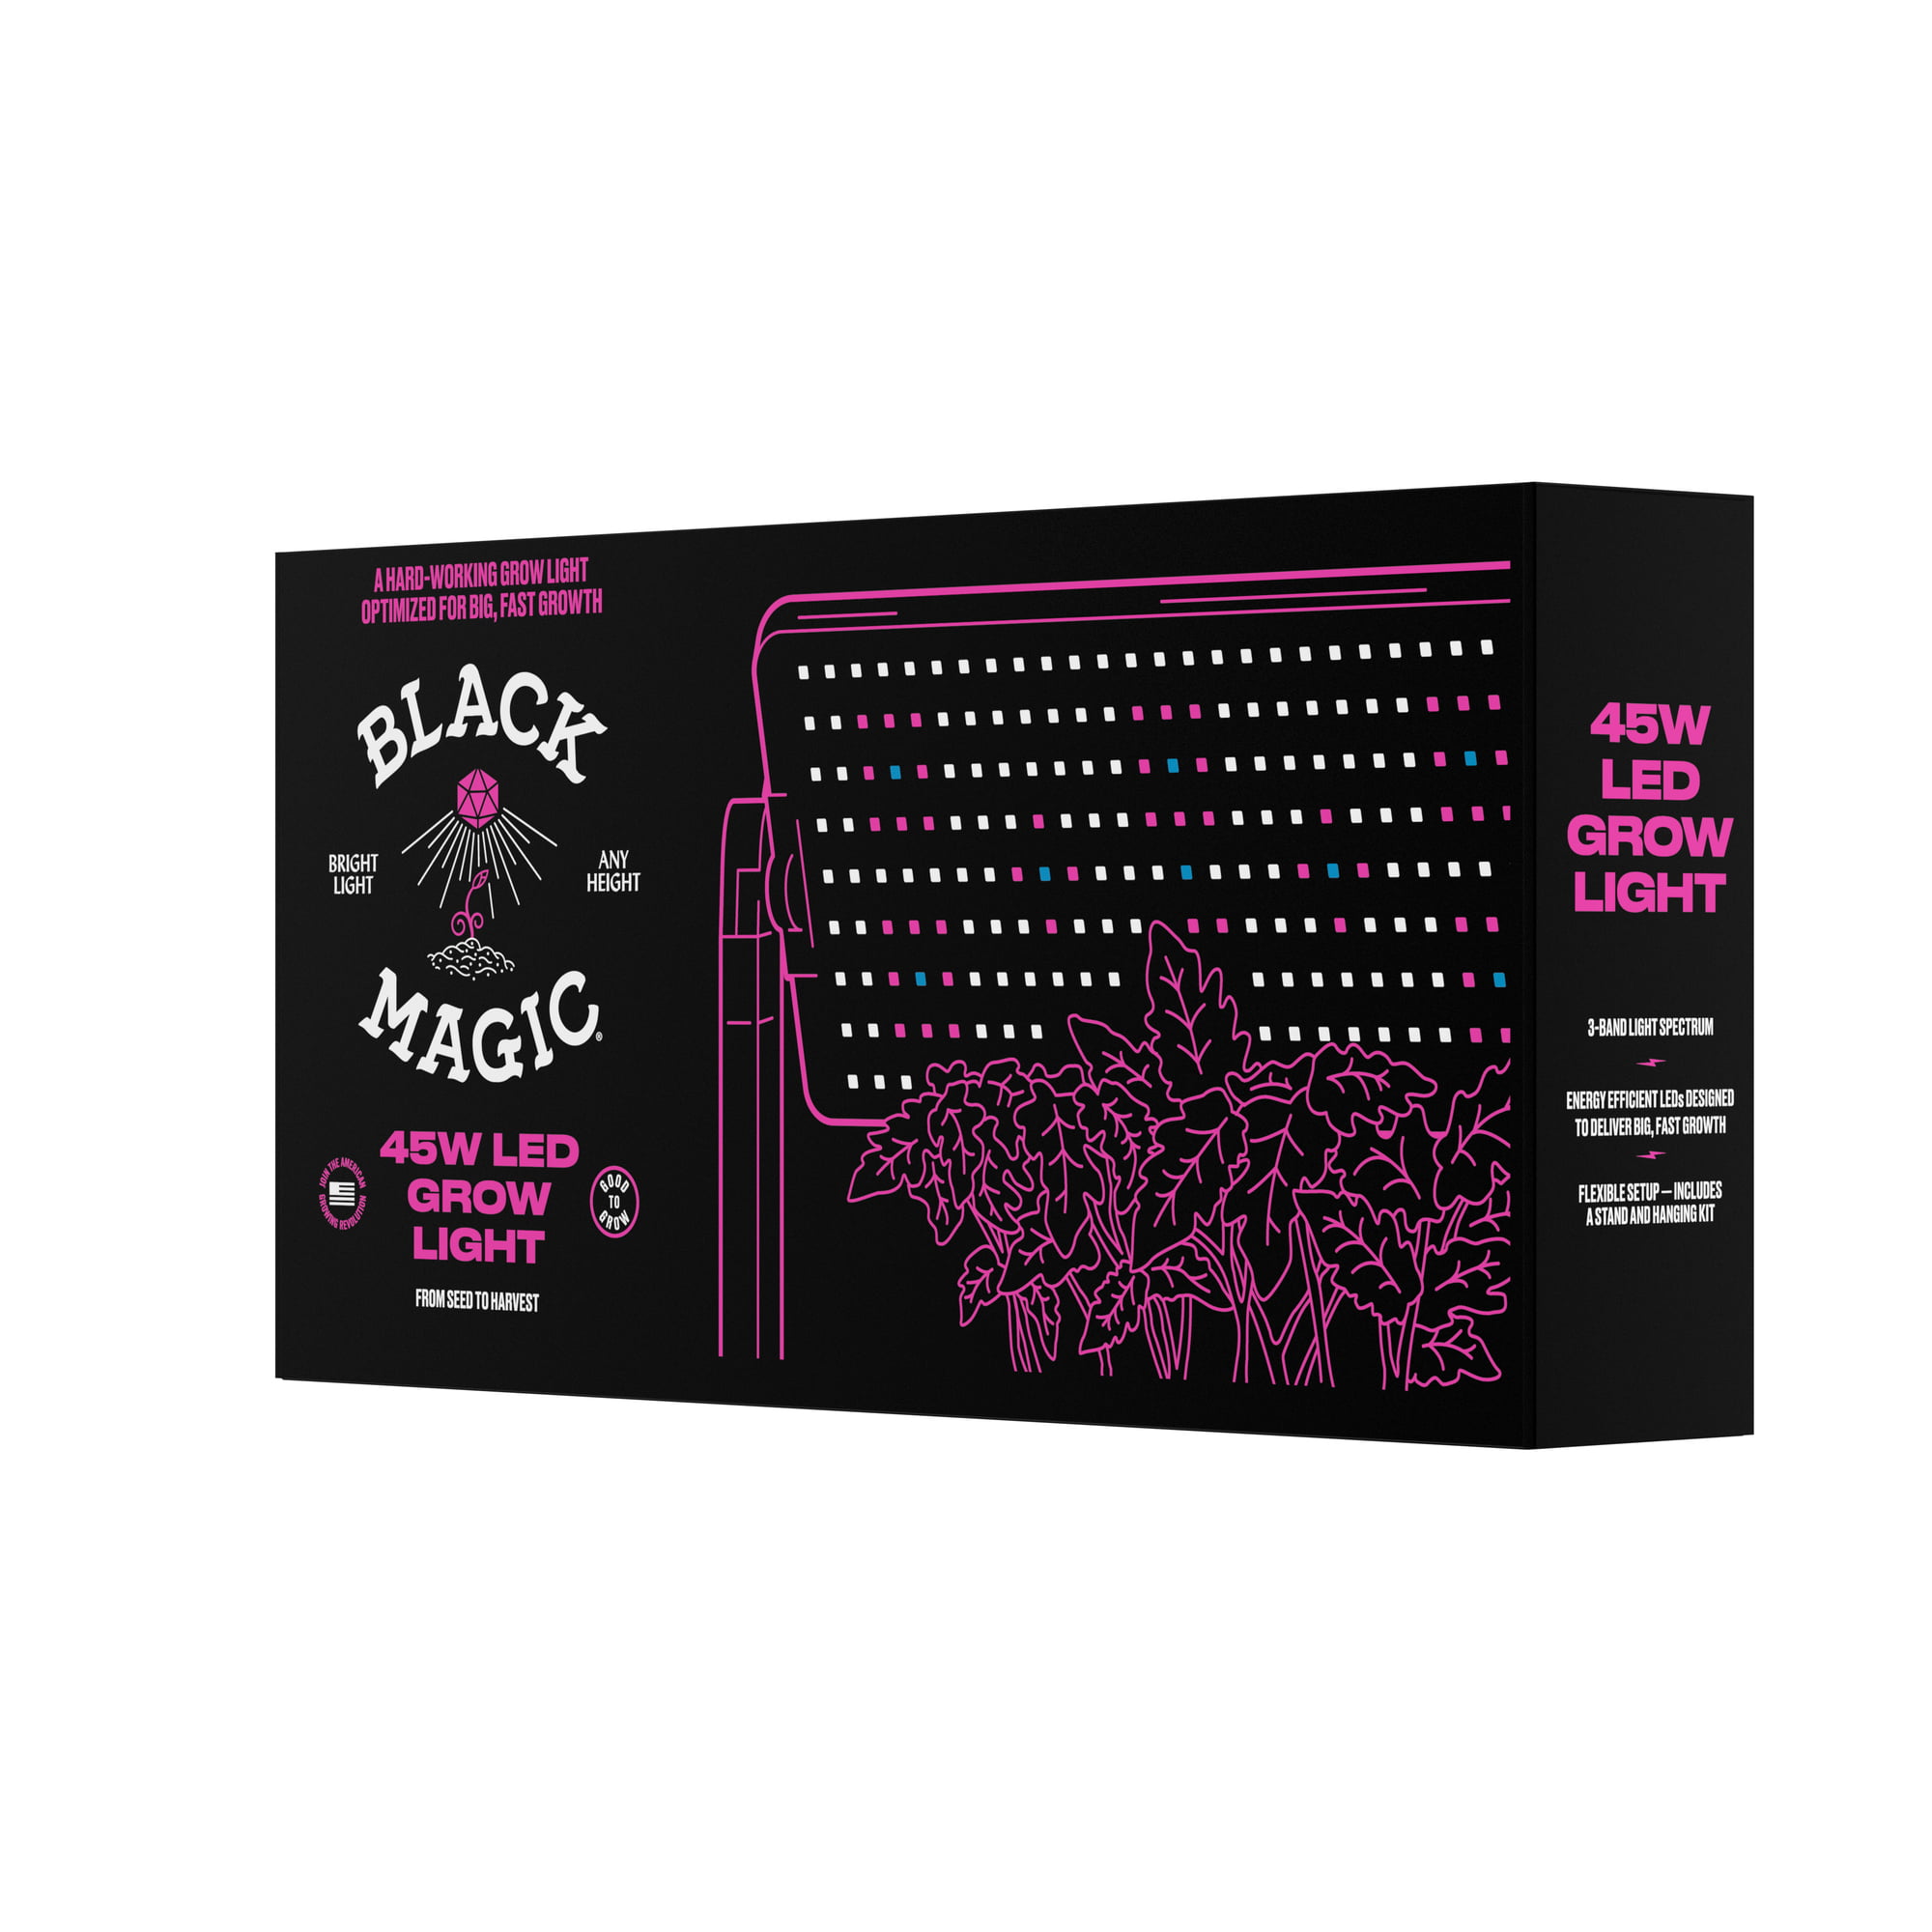 Black Magic 45W LED Grow Light - Band-Light Spectrum - Walmart.com